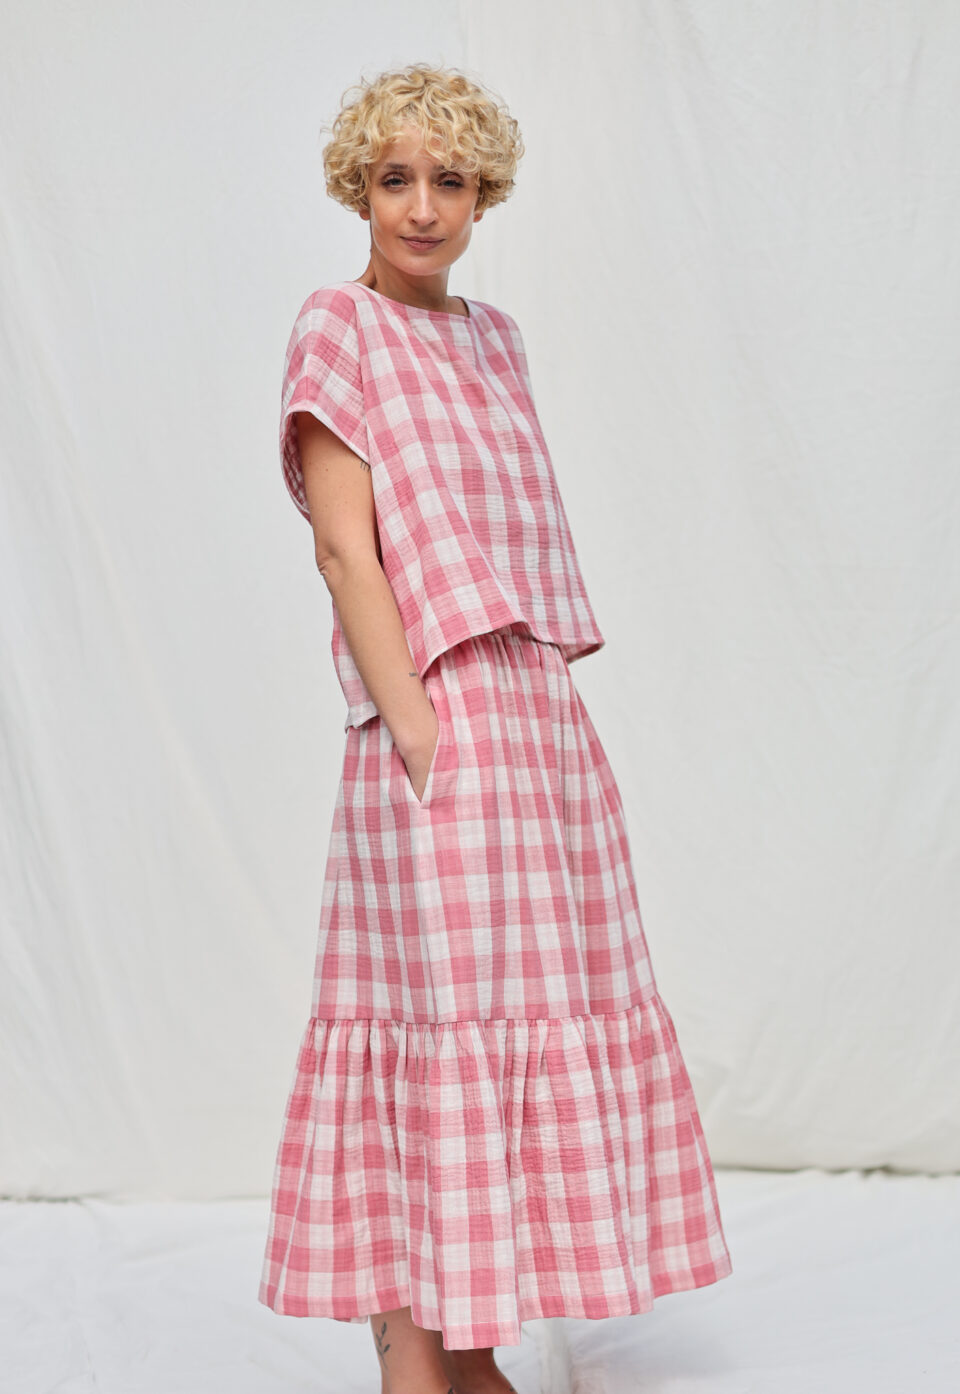 Elasticated waist ruffled hem skirt in pink double gauze checks | Skirt | Sustainable clothing | OffOn clothing